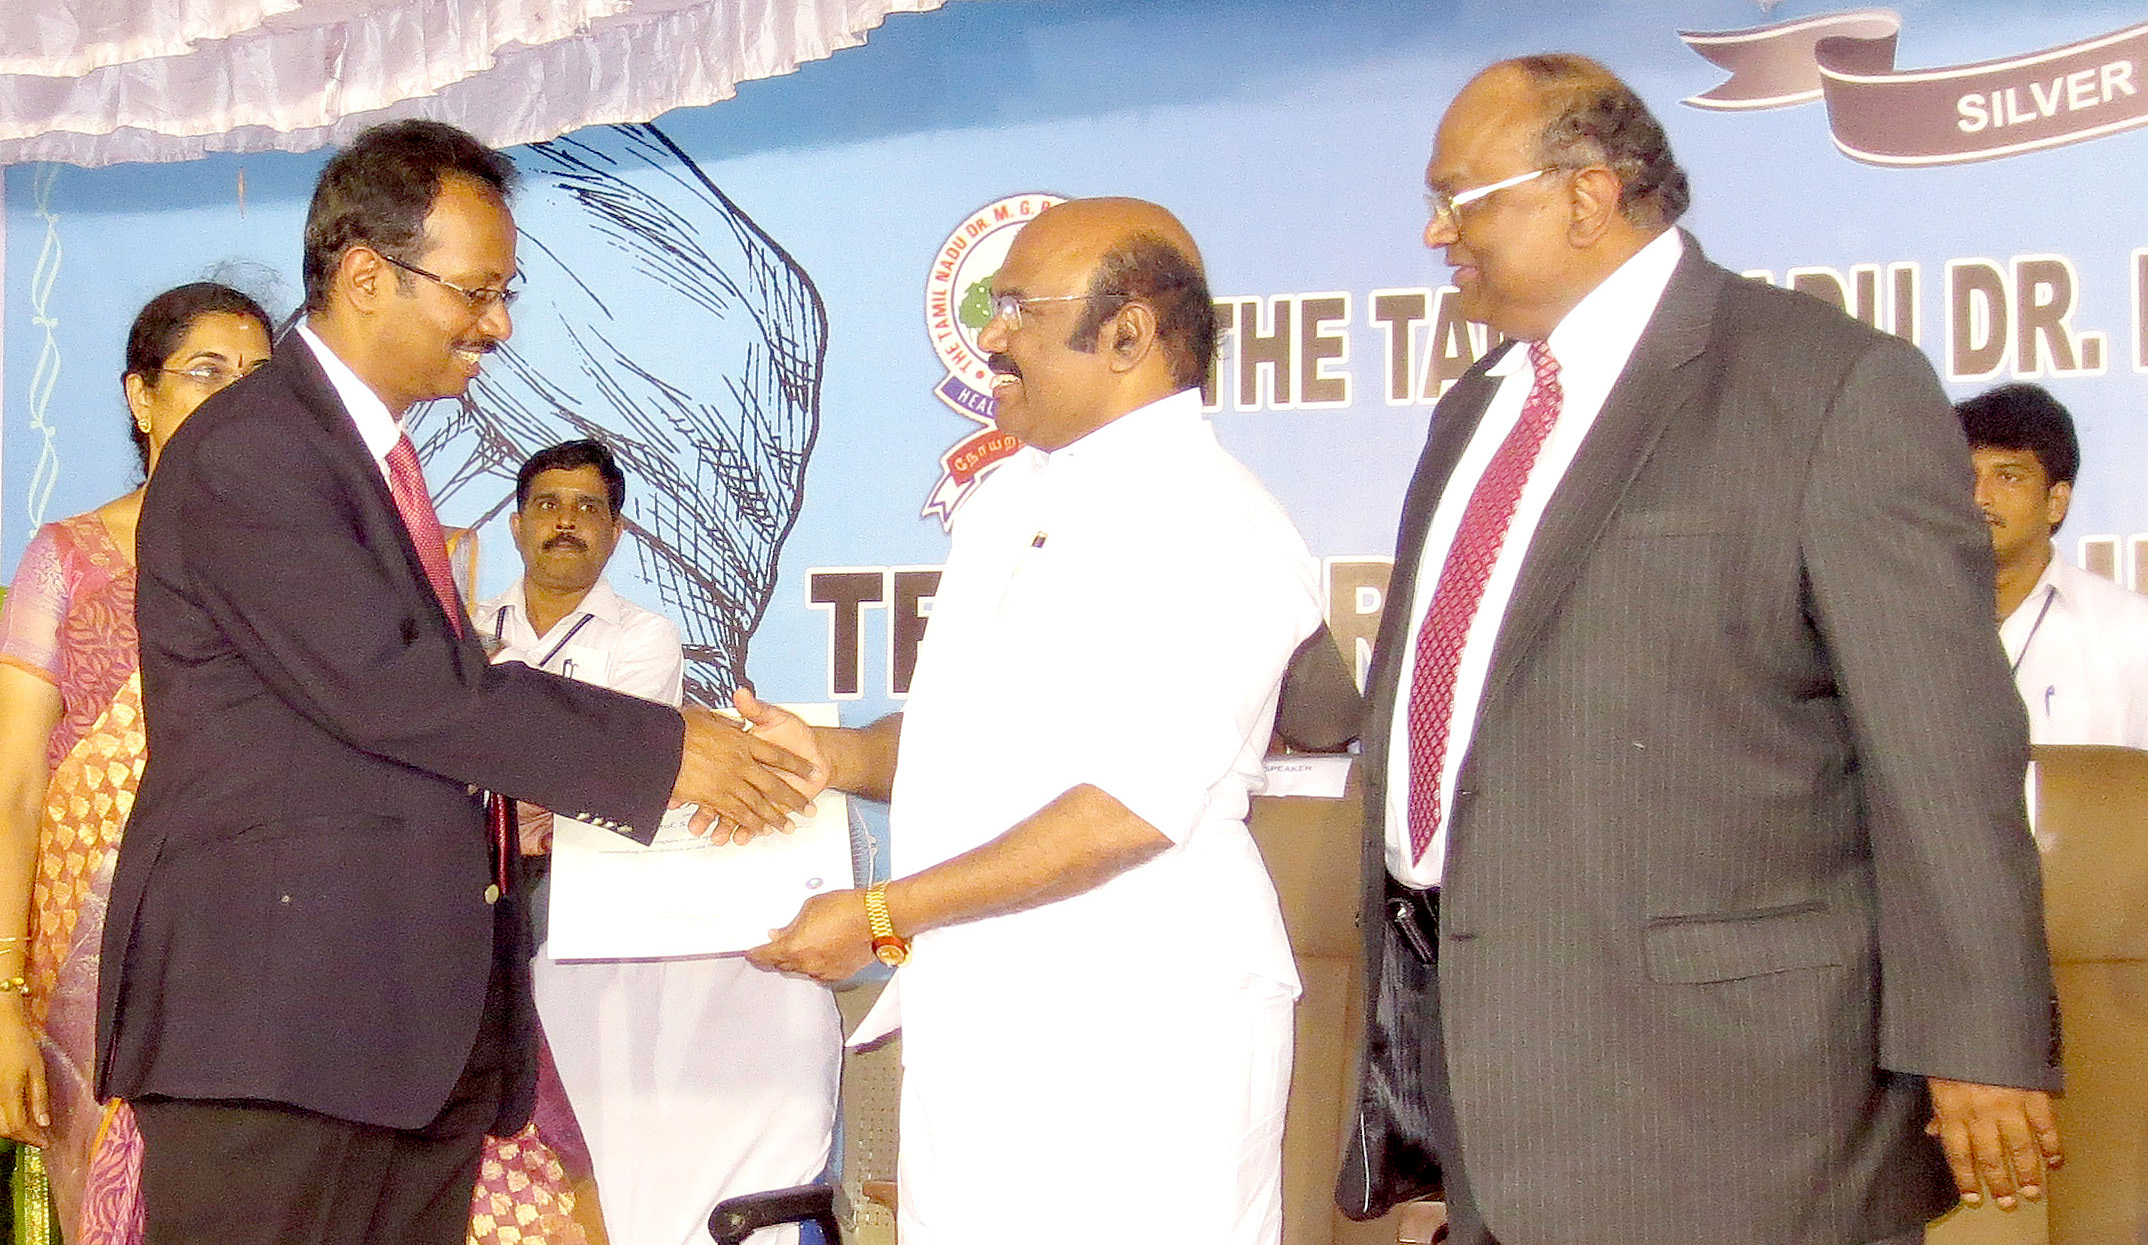 SCROLL OF HONOUR – TEACHER'S DAY, The Tamilnadu Dr MGR Medical University